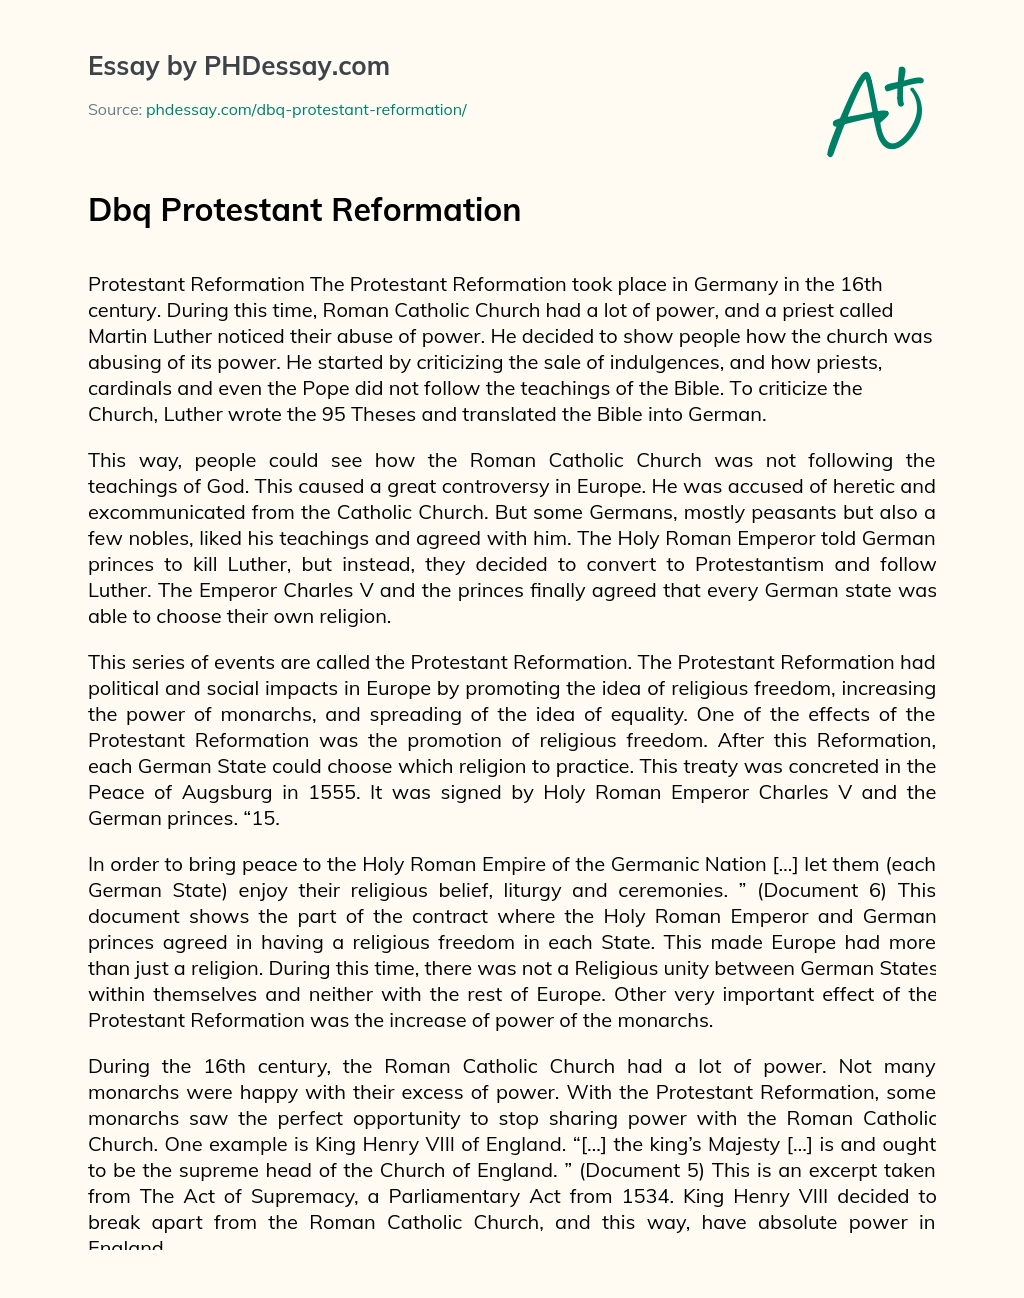 Dbq Protestant Reformation essay